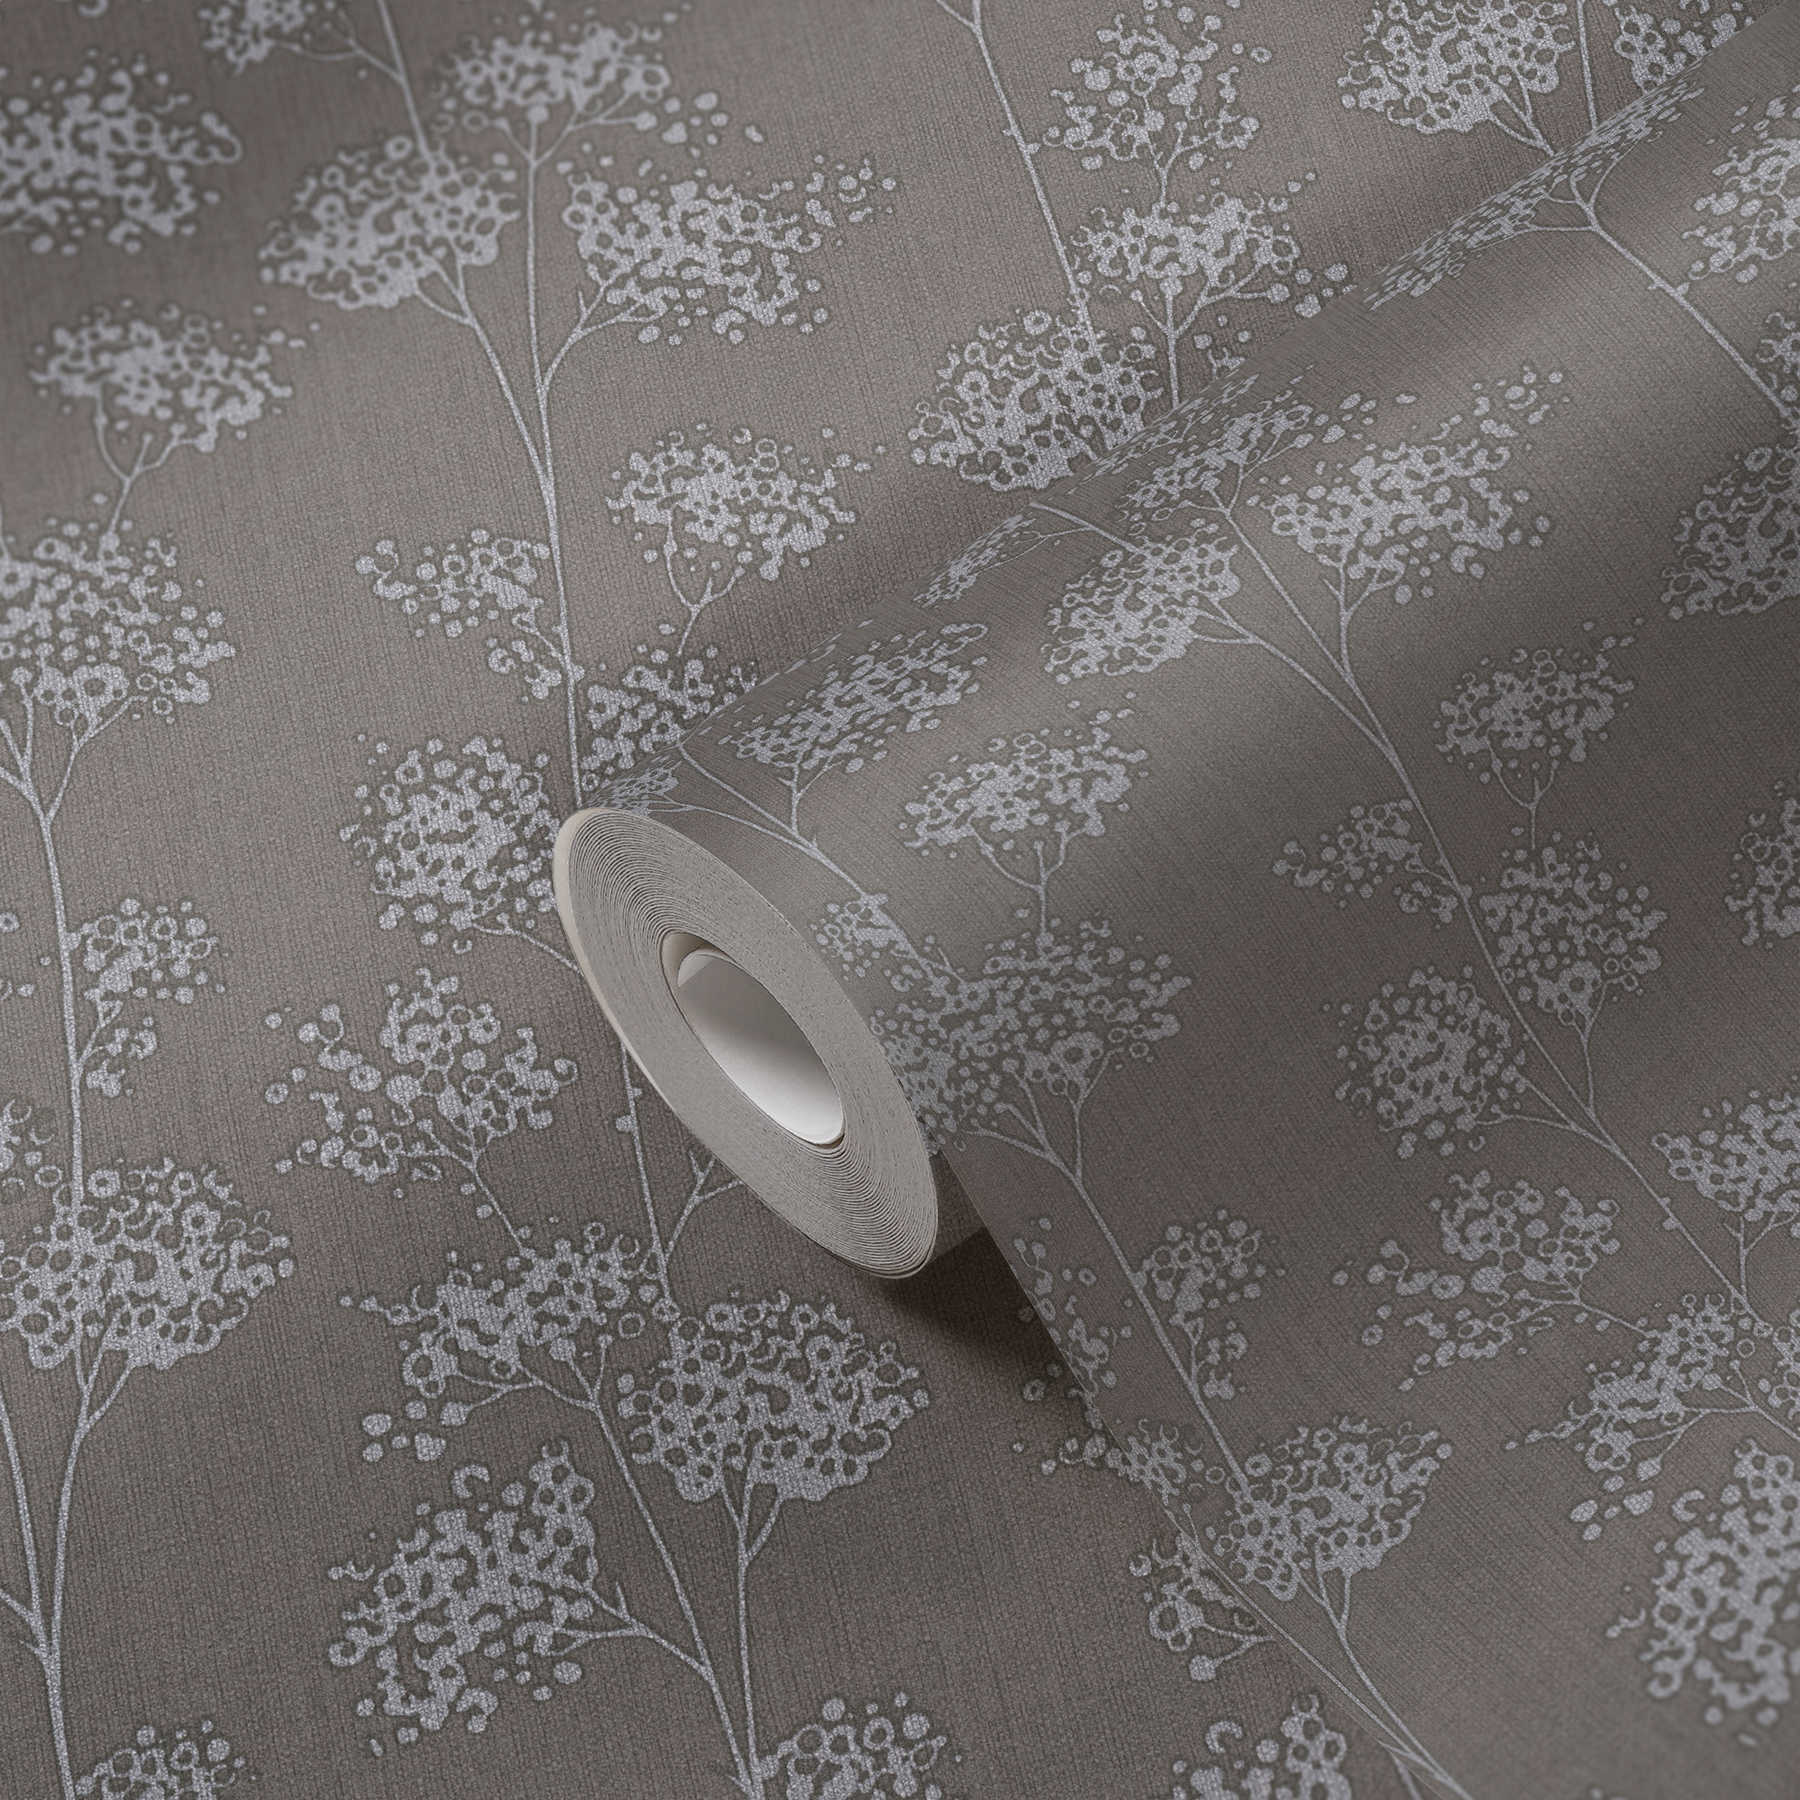             Linen optics wallpaper country style & nature motif - Brown, Metallic
        